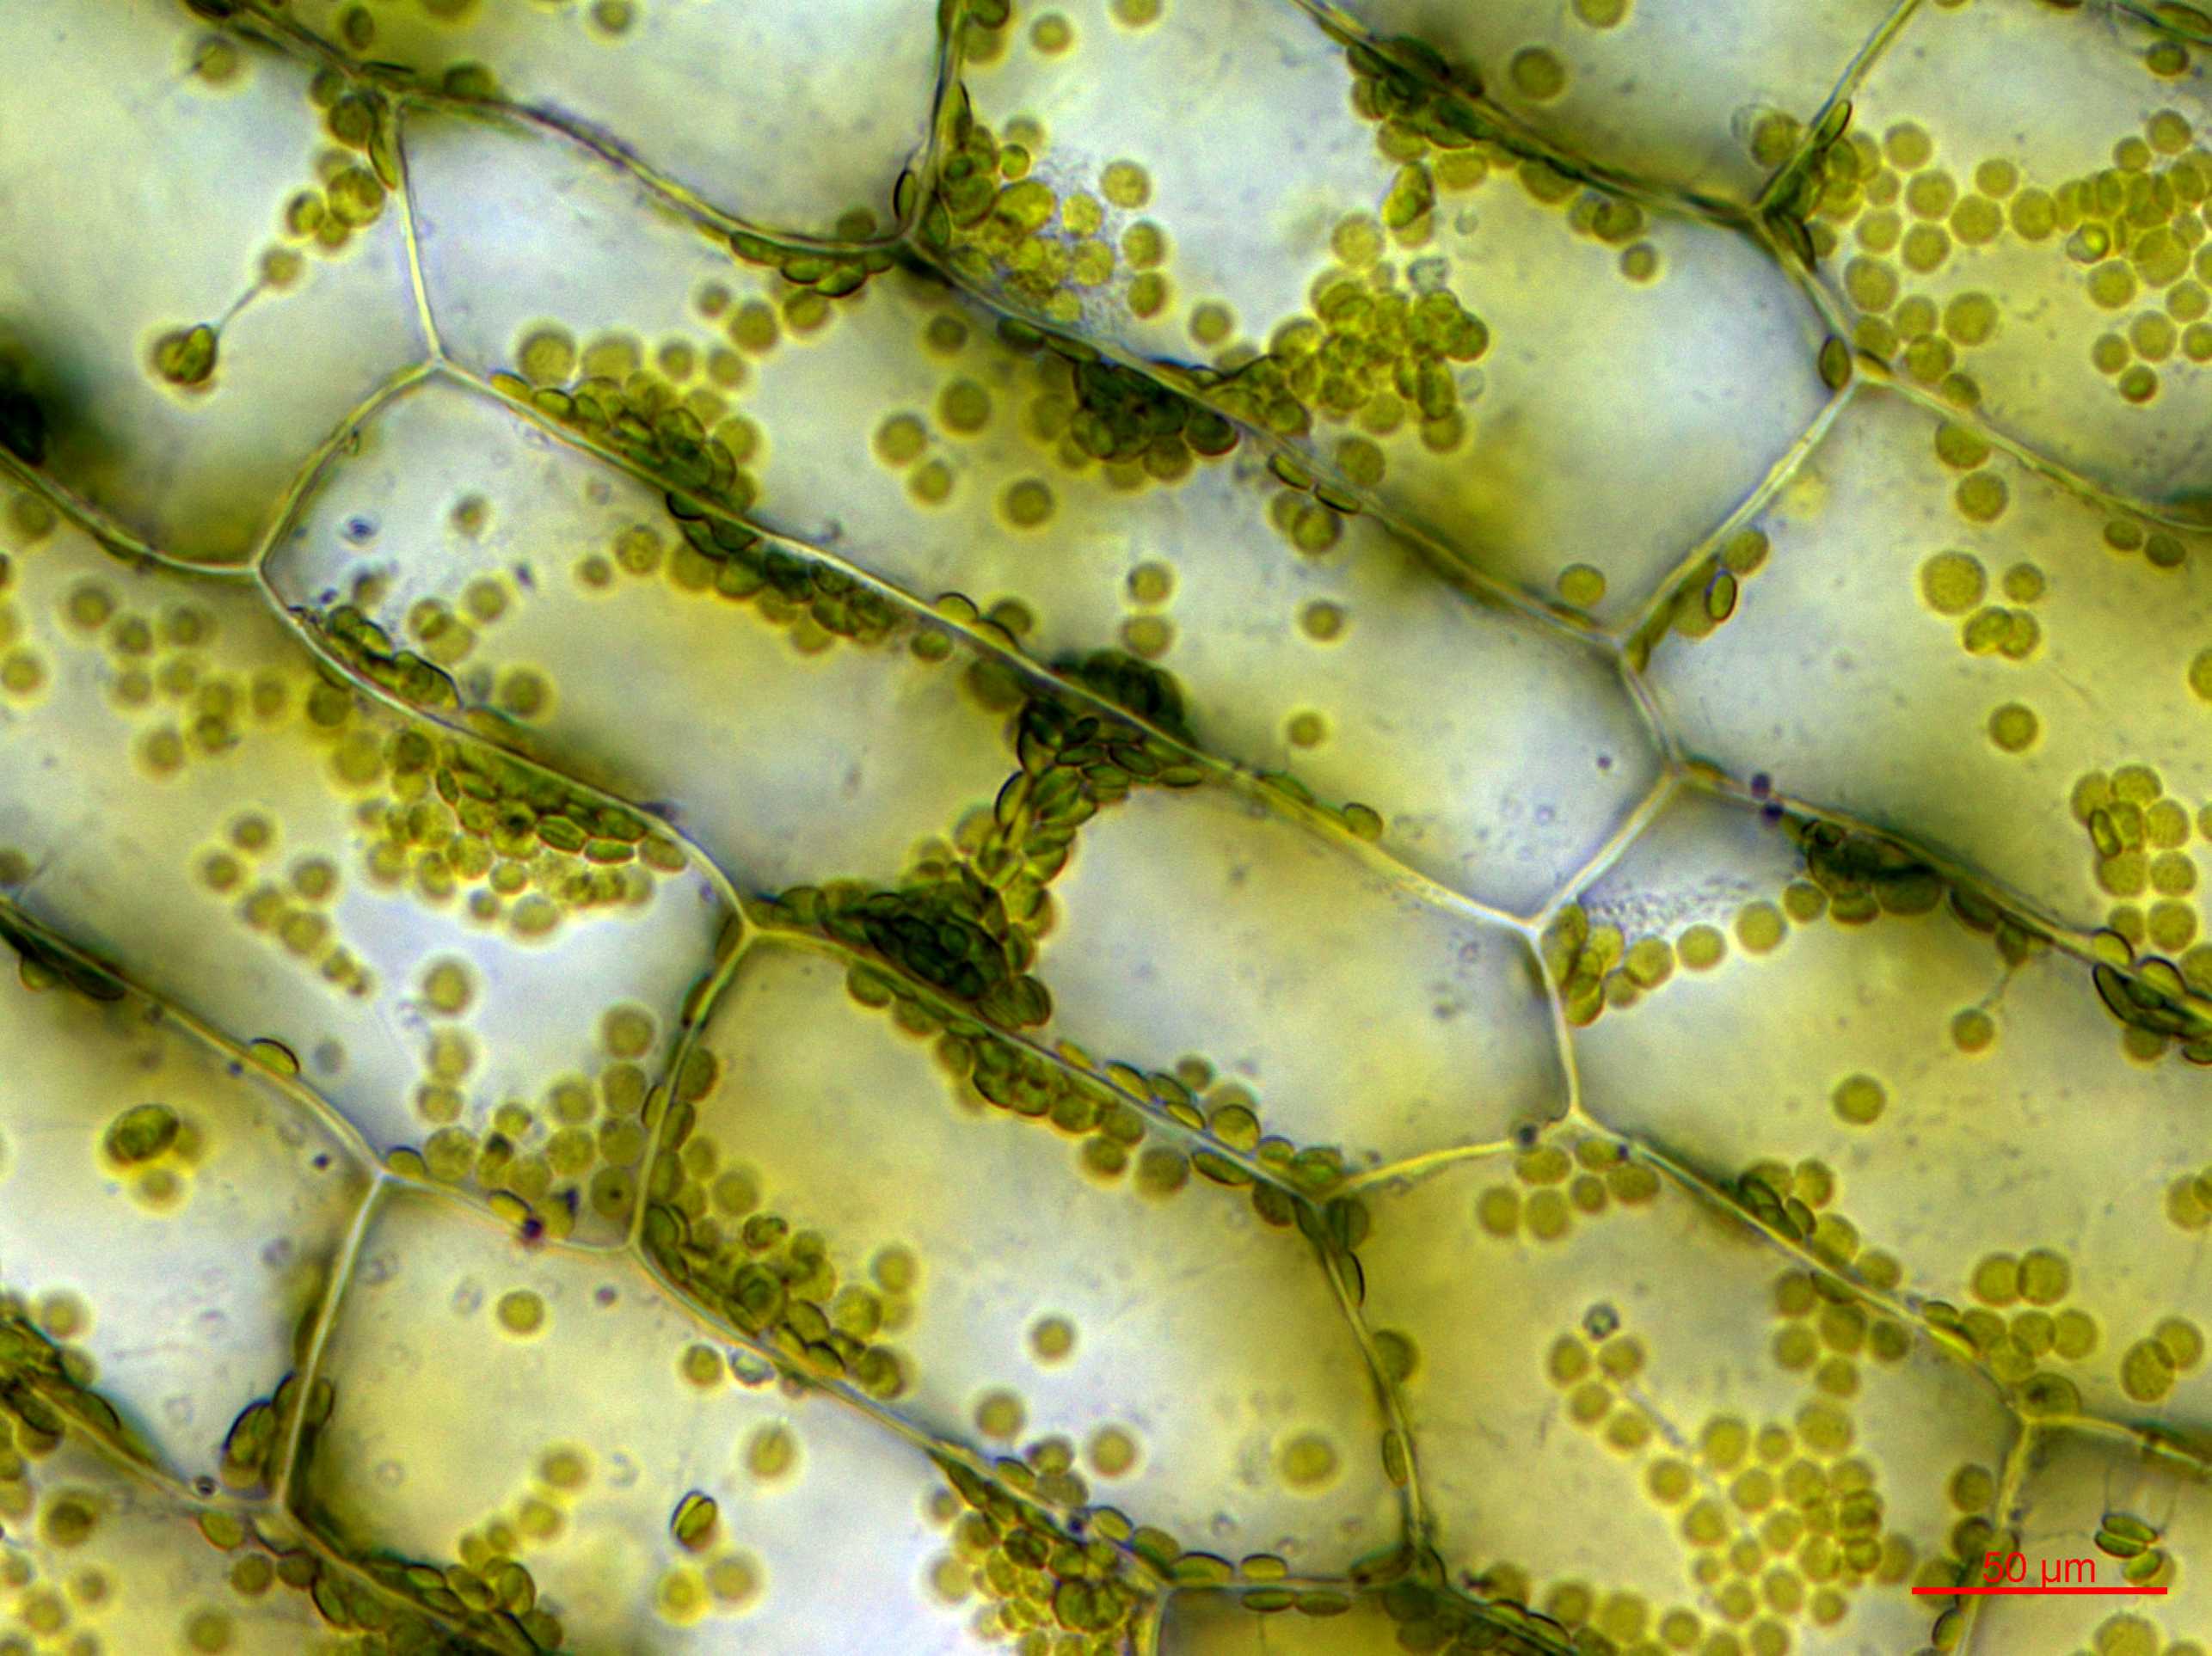 Enlarged view: Chloroplast